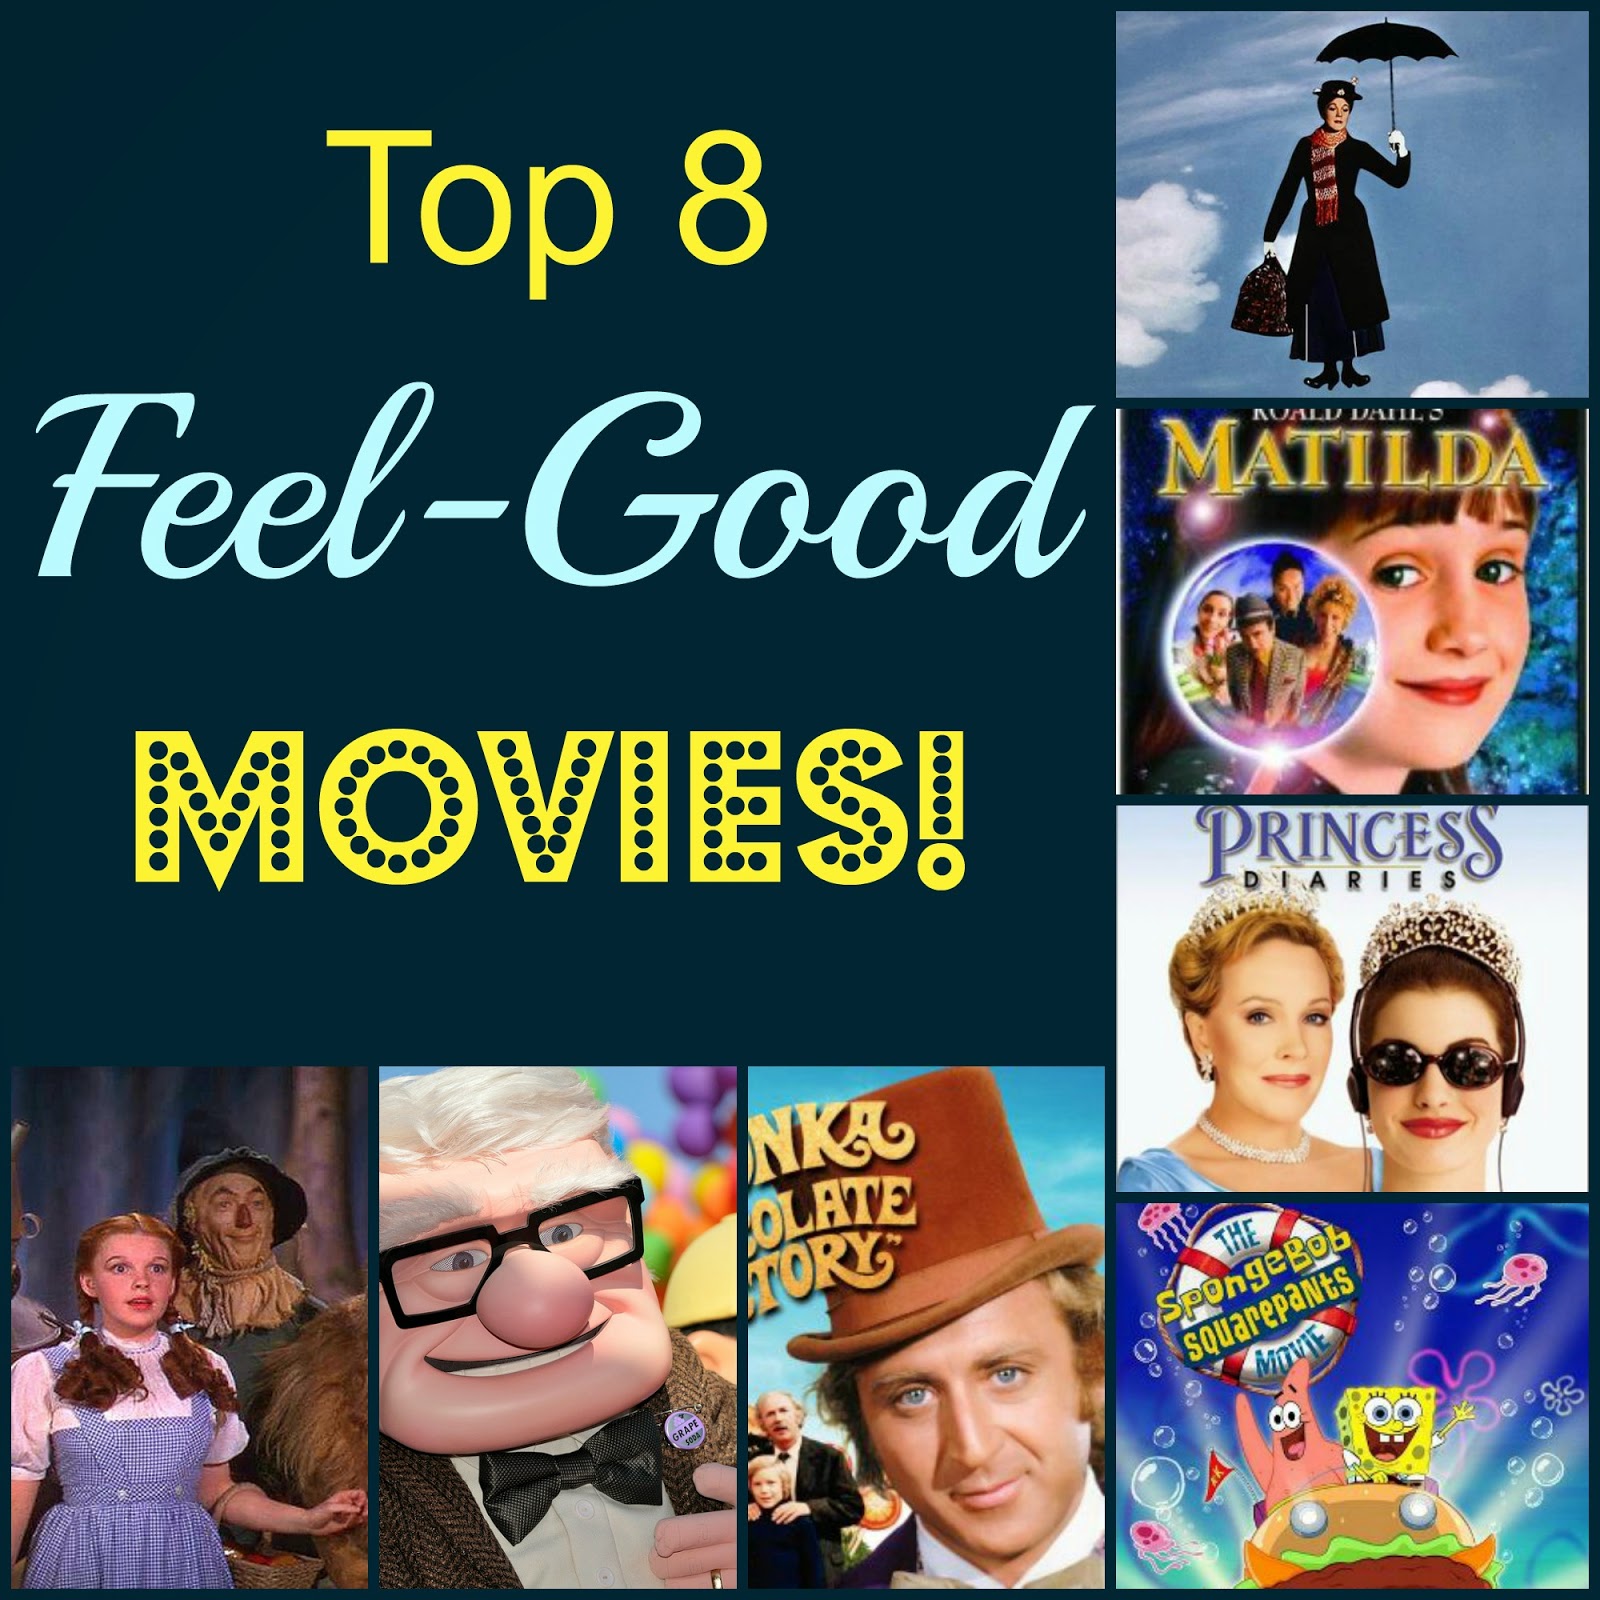 Kimberly's Chronicle: Top 8 Feel-Good Movies!